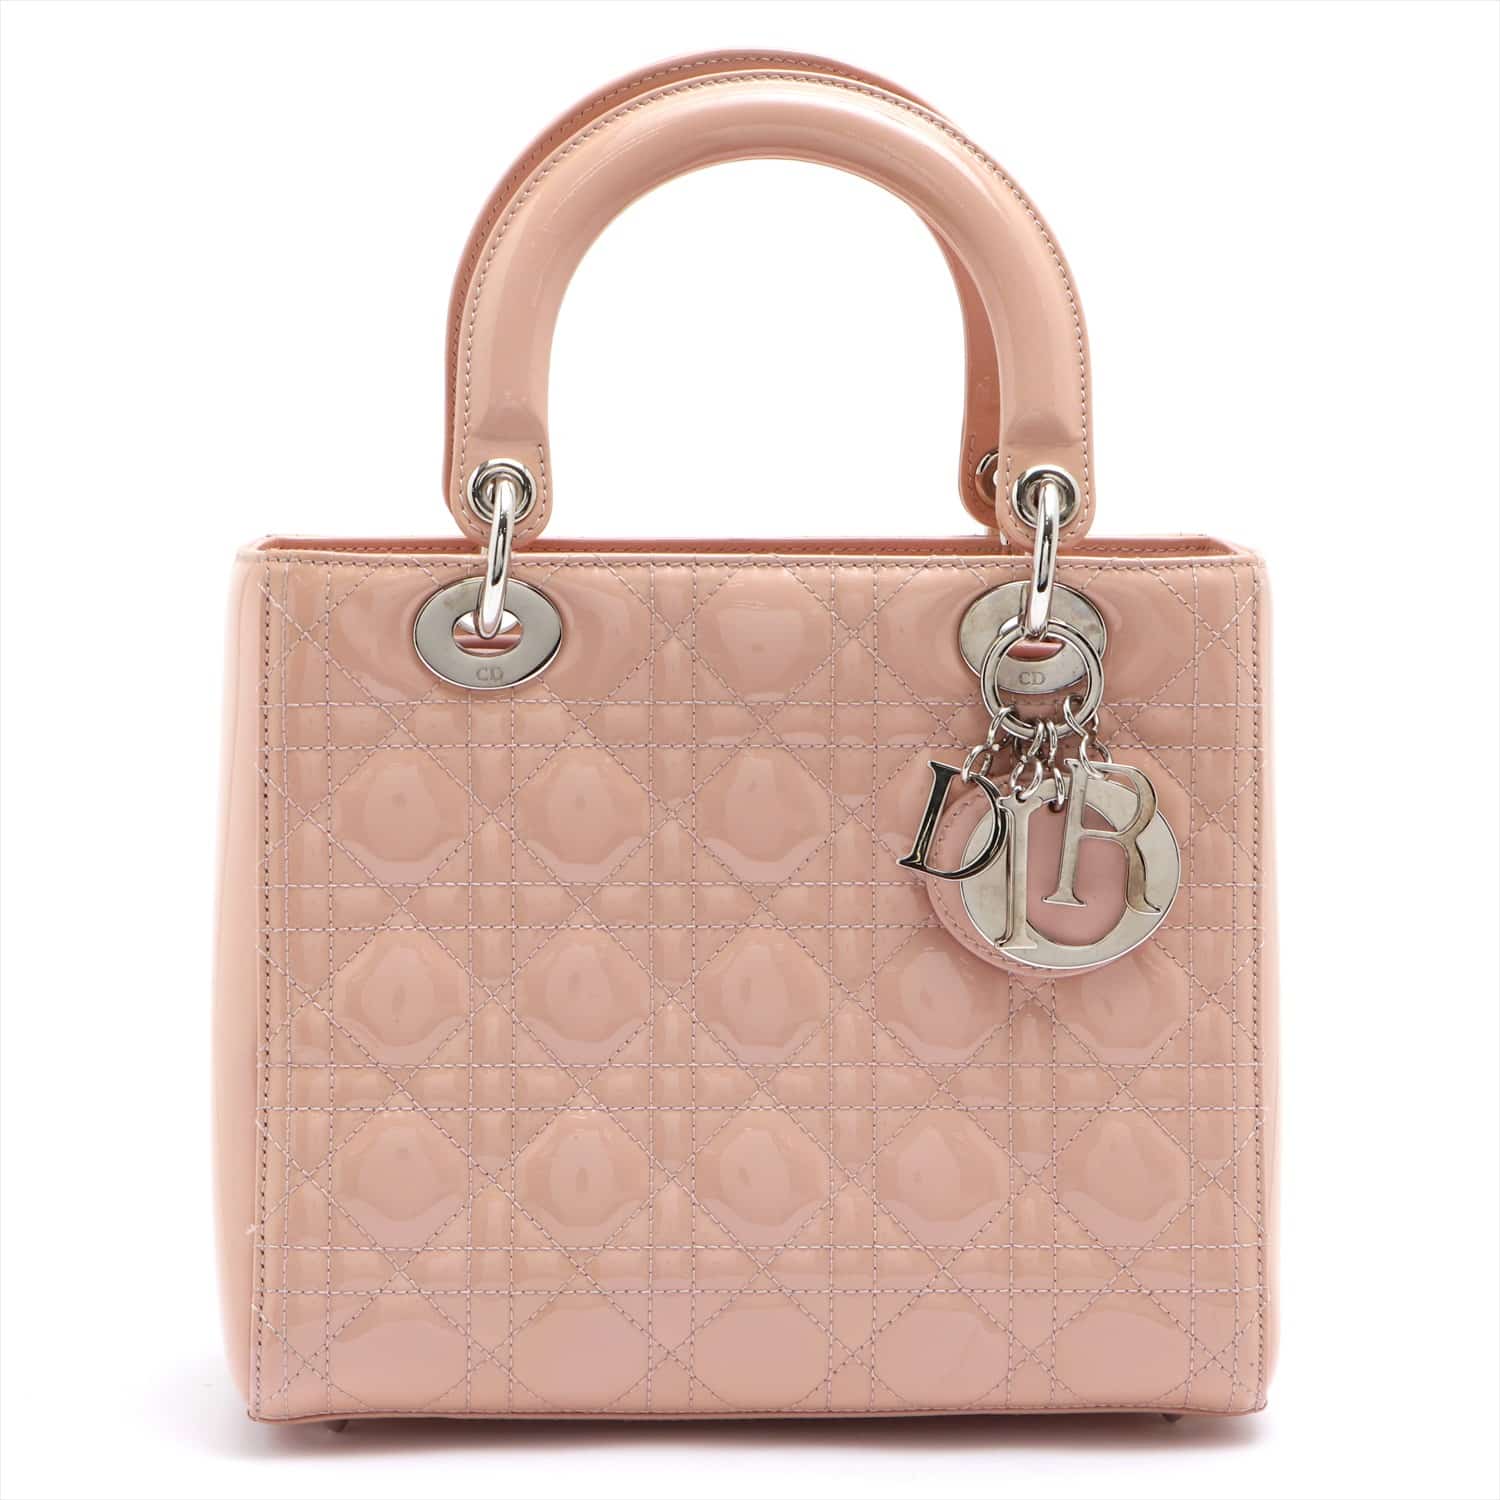 Christian Dior Lady Dior Cannage Patent leather 2way handbag Pink